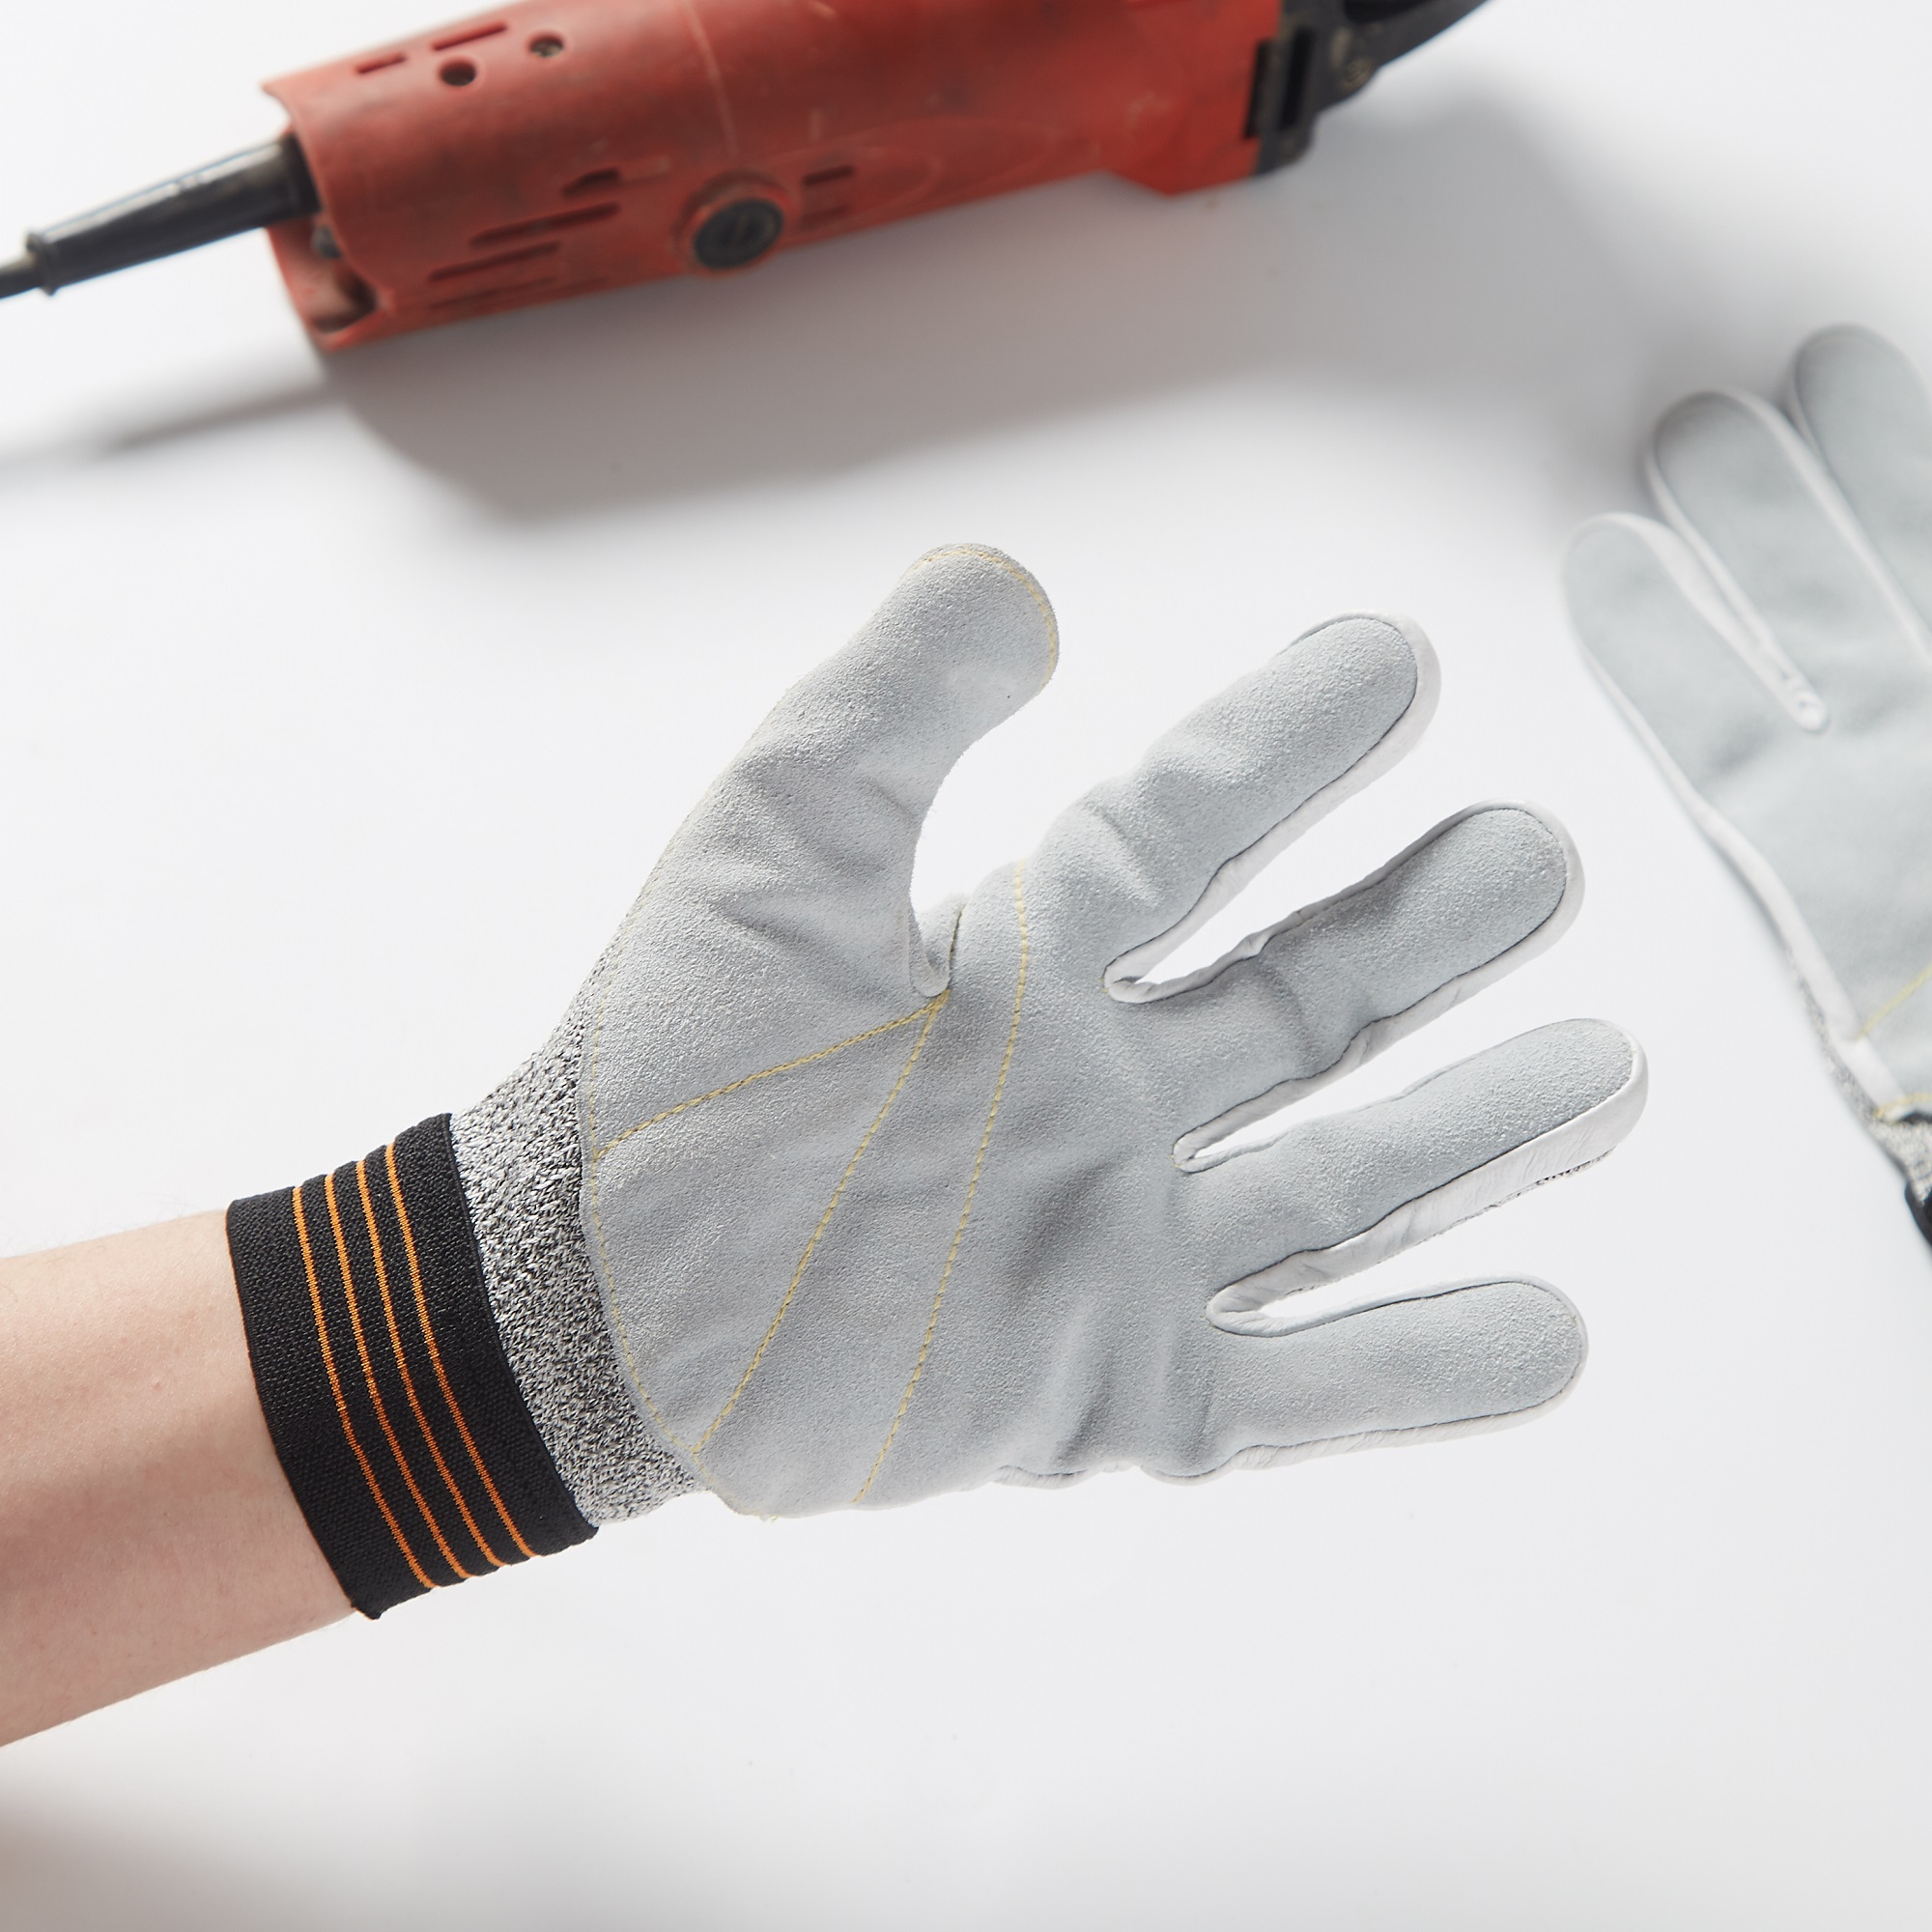 En388 4543 Hand Safety Anti Cut Construction Gloves Work Level 5 Cut Resistant Glove